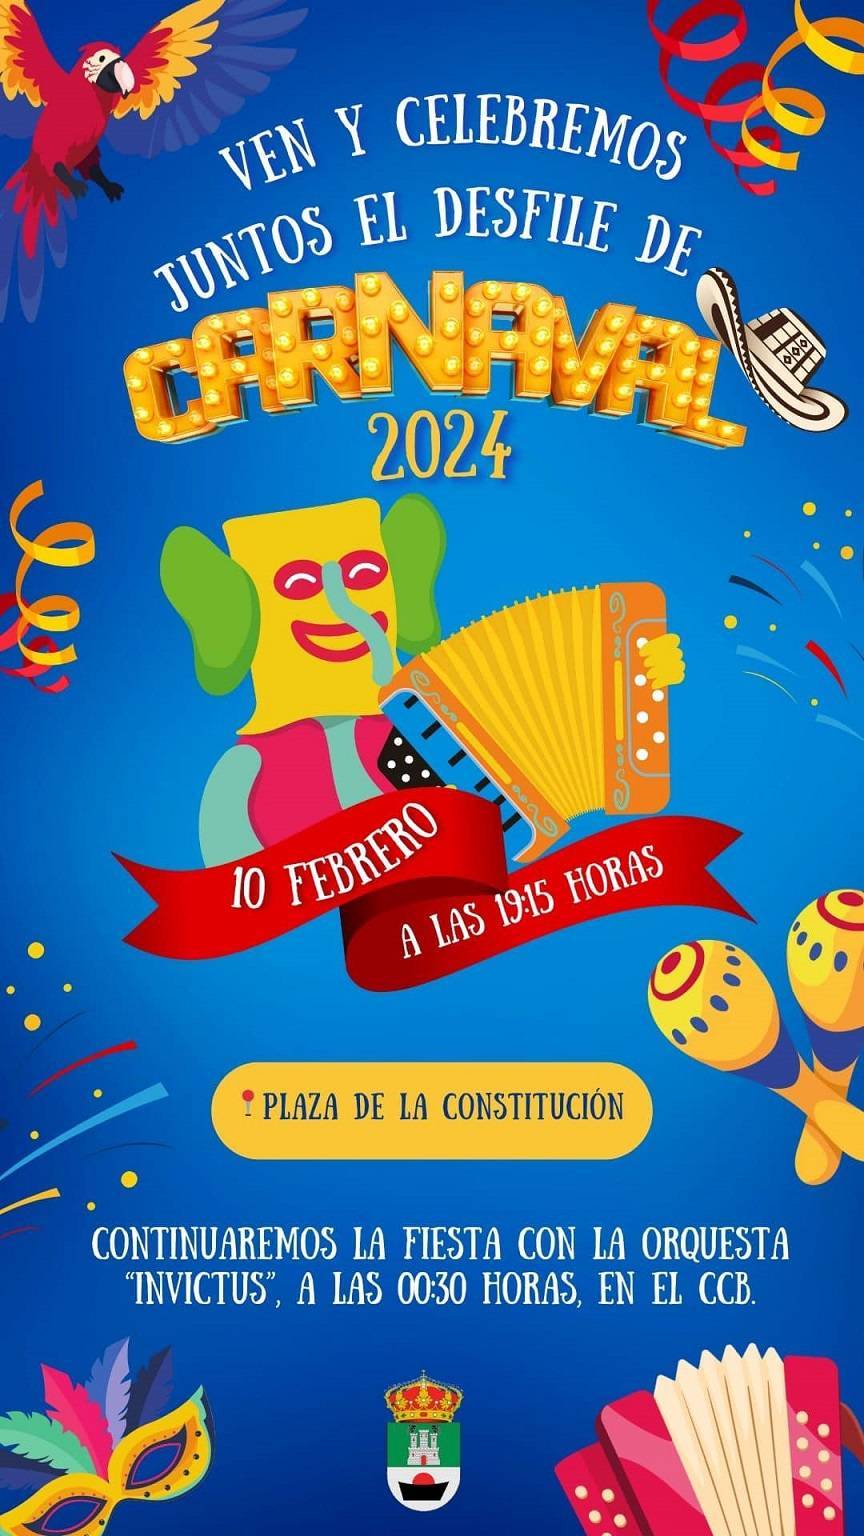 Carnaval (2024) - Bonete (Albacete)